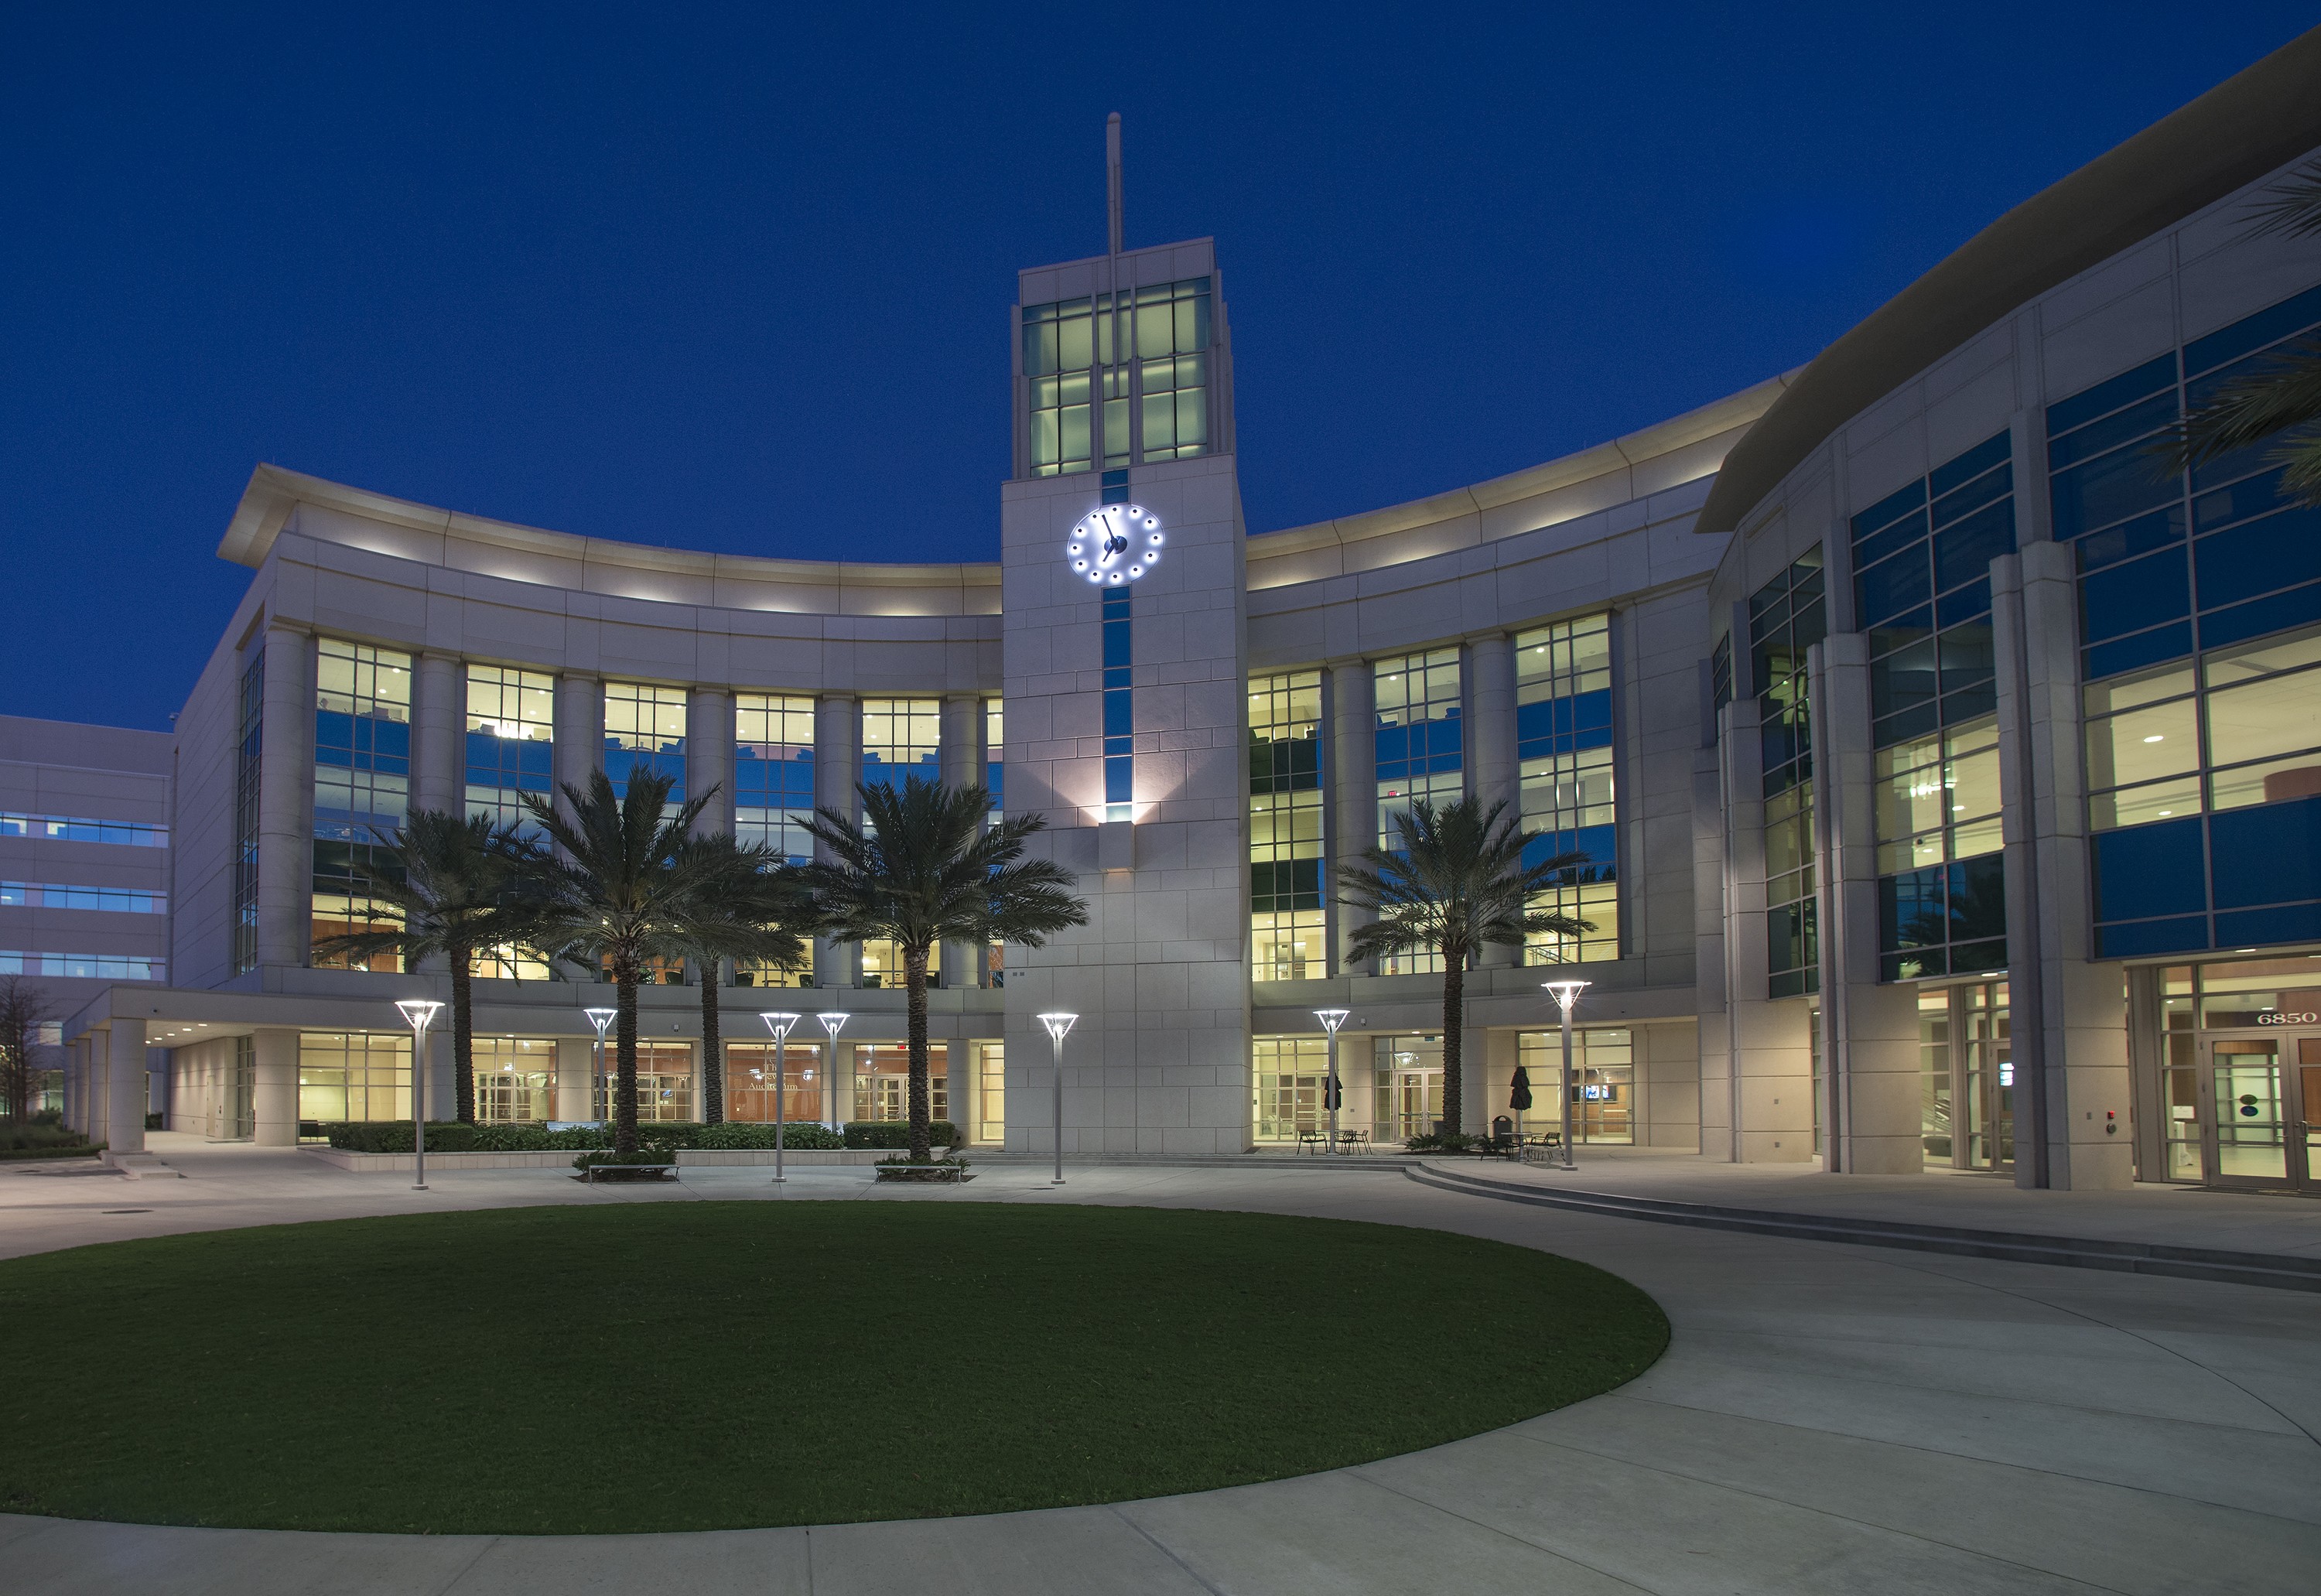 University of Central Florida - College of Medicine | LinkedIn